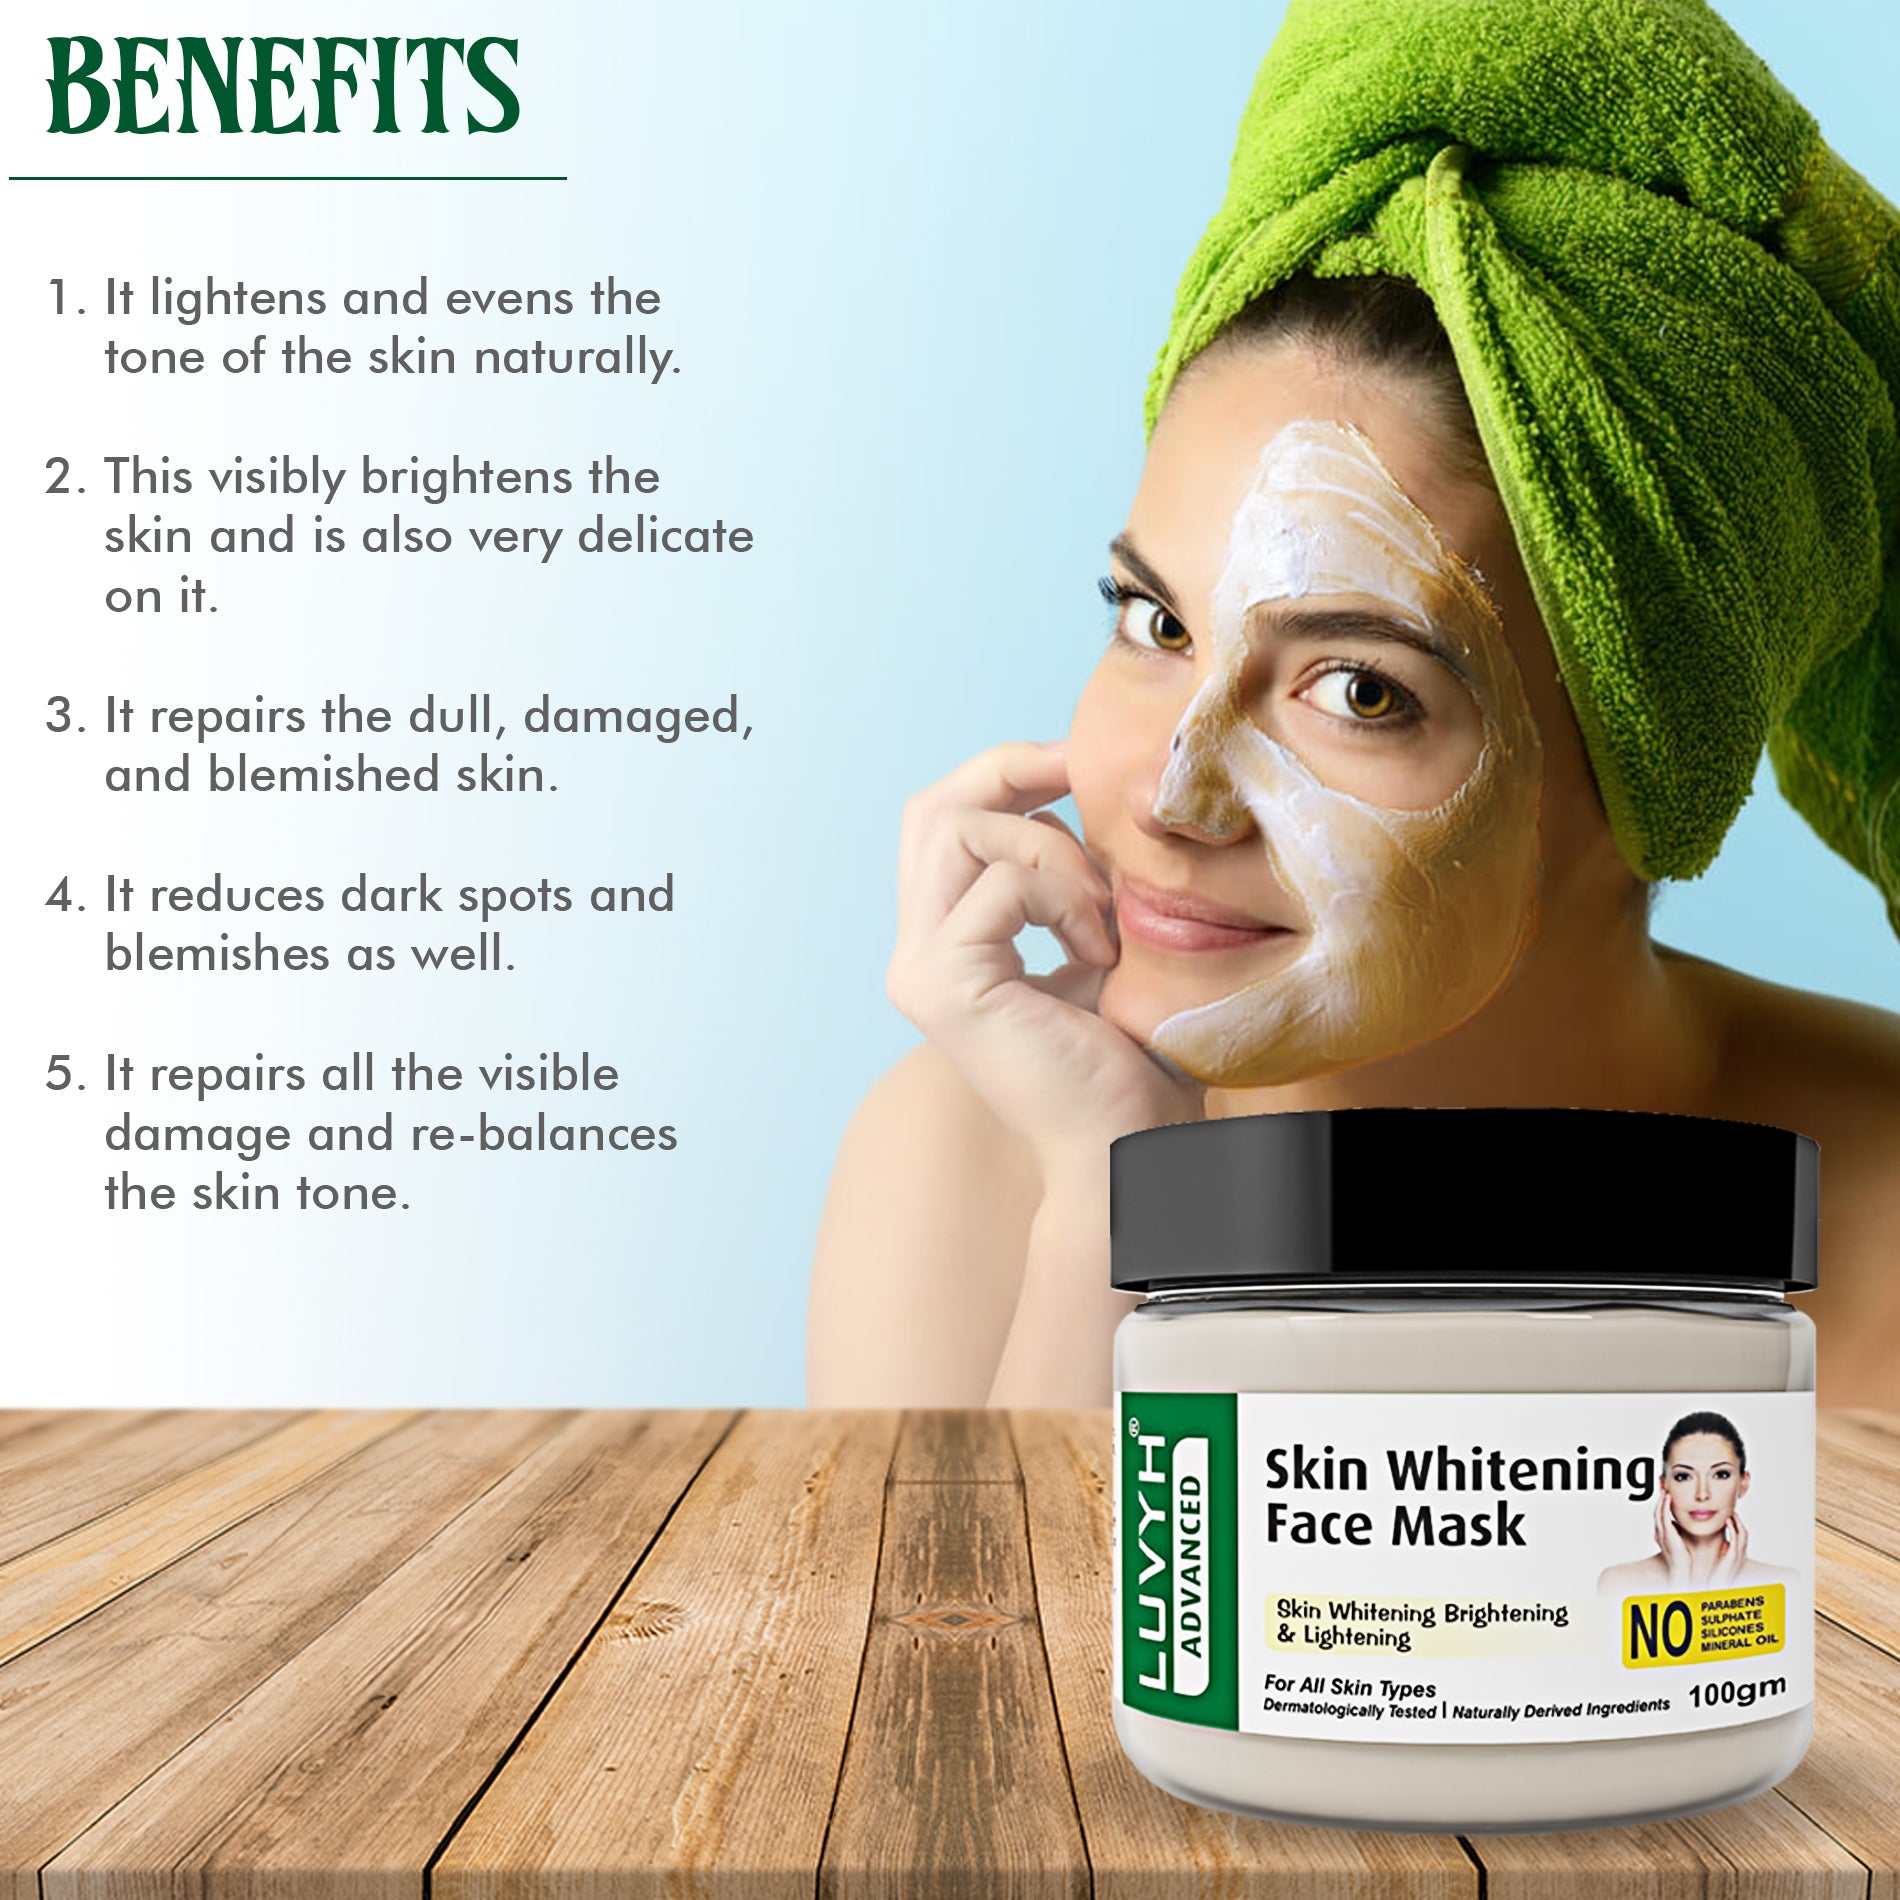 Benefits of Skin Whitening Face Mask